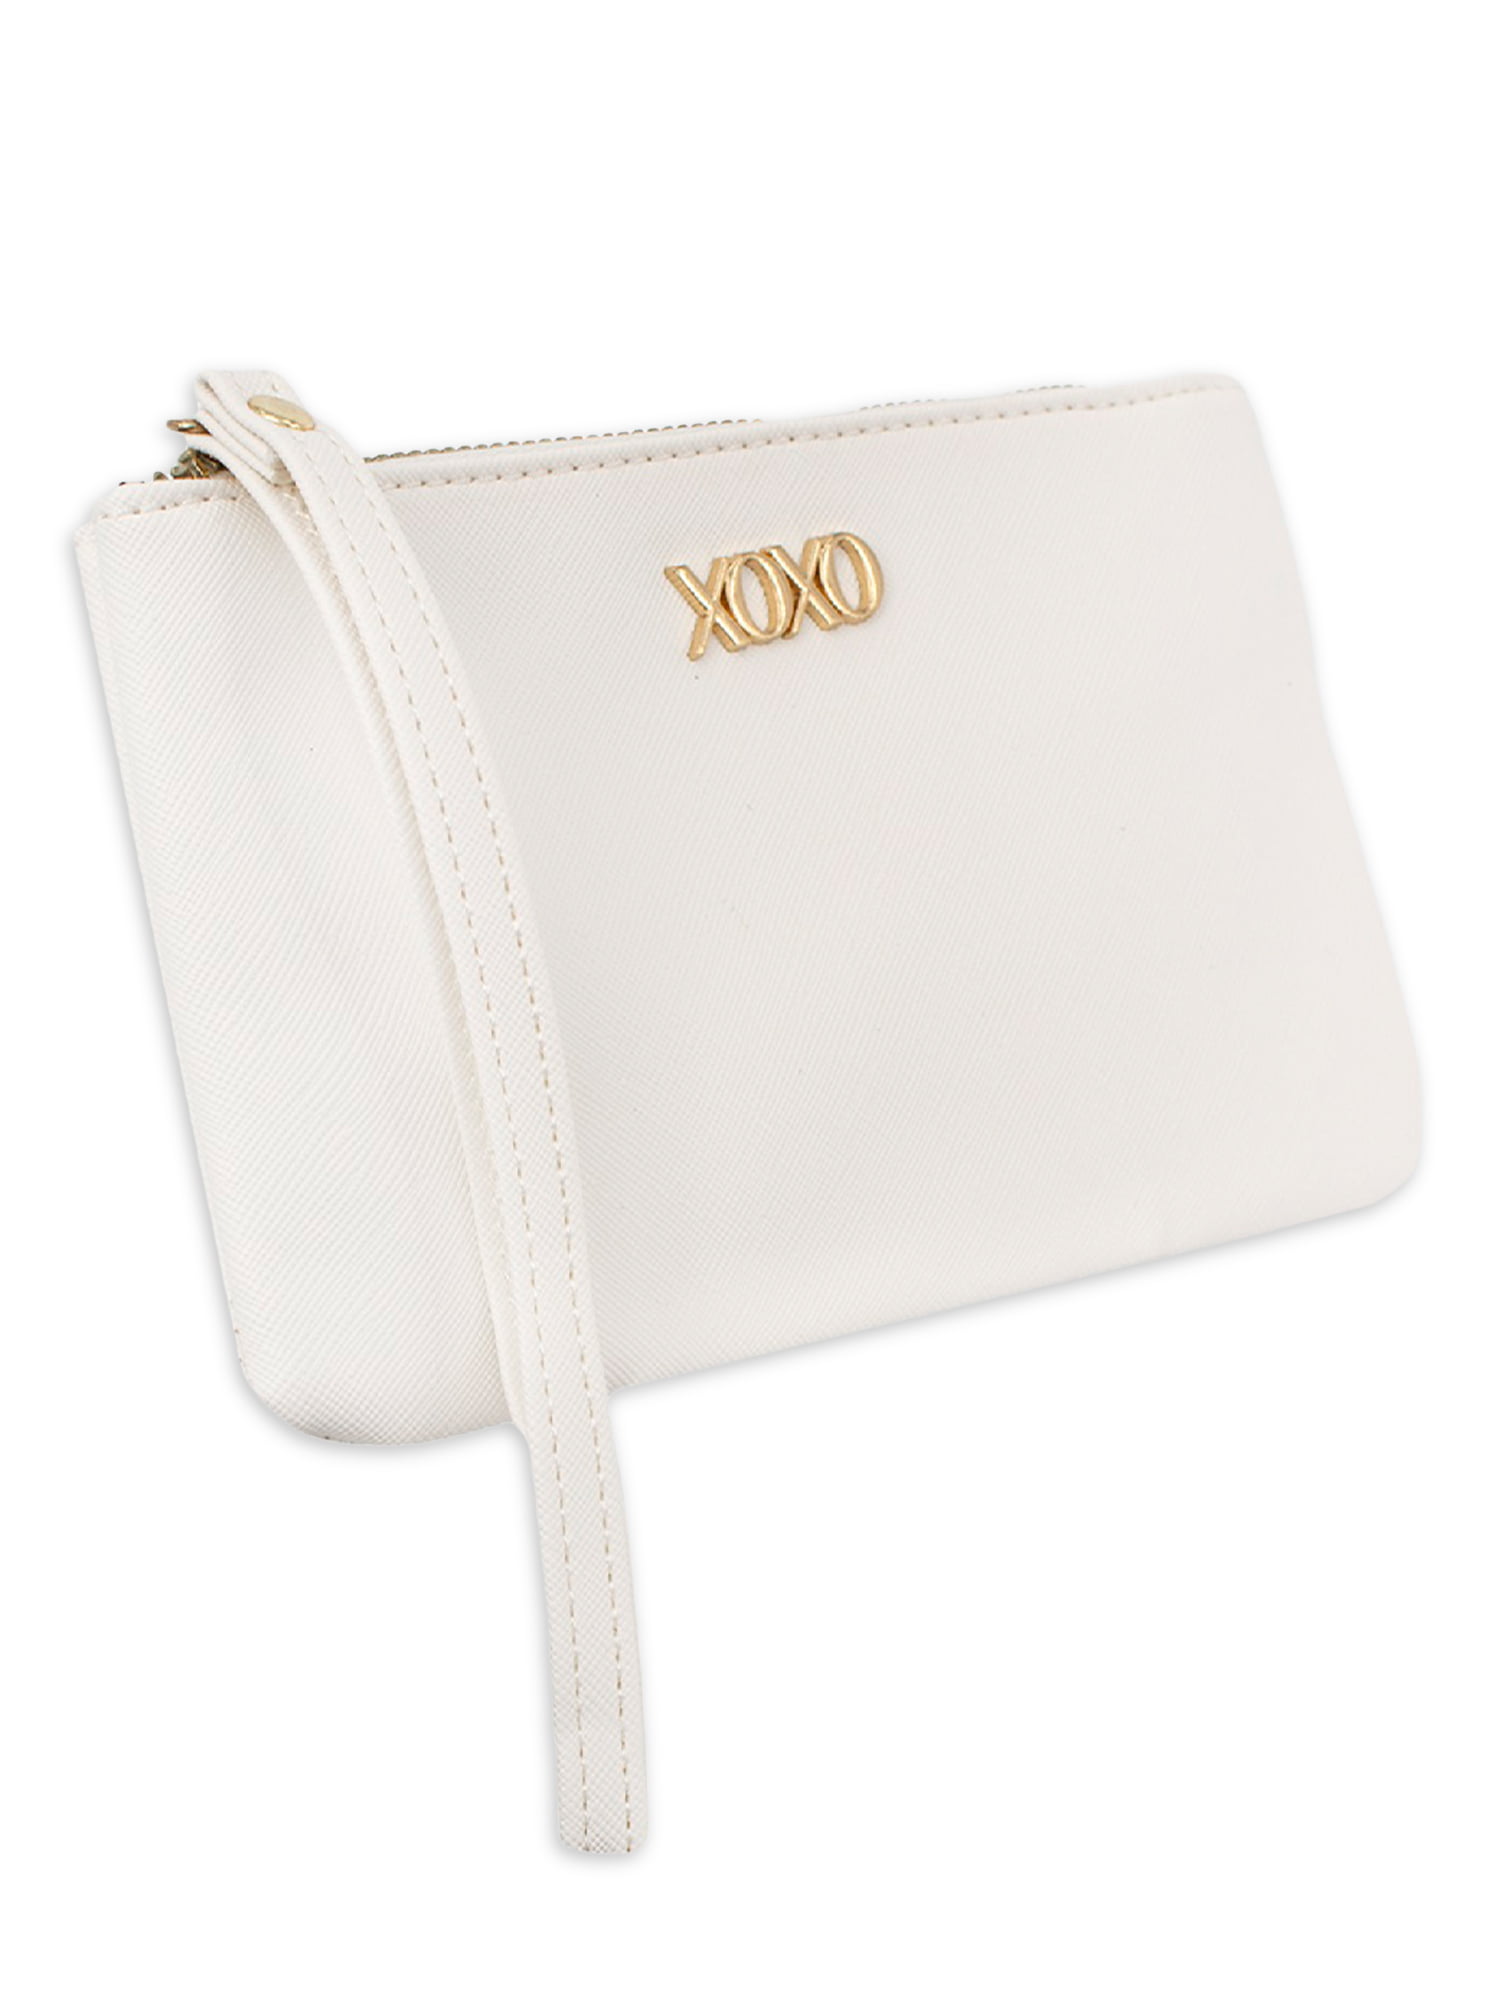 Aestoria Women's White Hardshell Clutch Handbag Lightweight Zip Wristlet  Purse for Everyday Use - Walmart.com